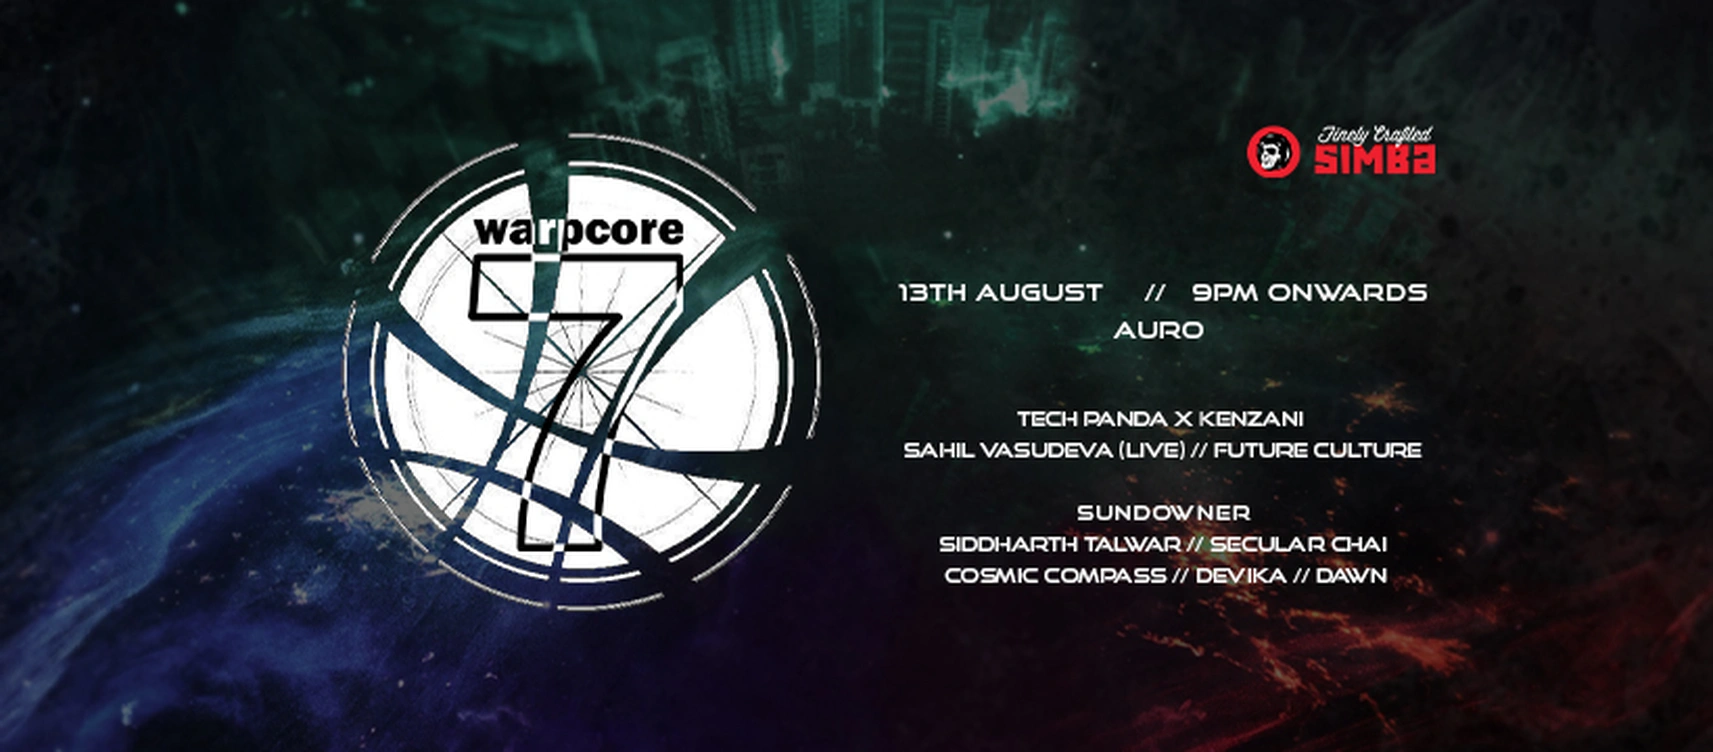 7 Years of warpcore ft. Tech Panda x Kenzani, Sahil Vasudeva (Live), Future Culture and Many more!